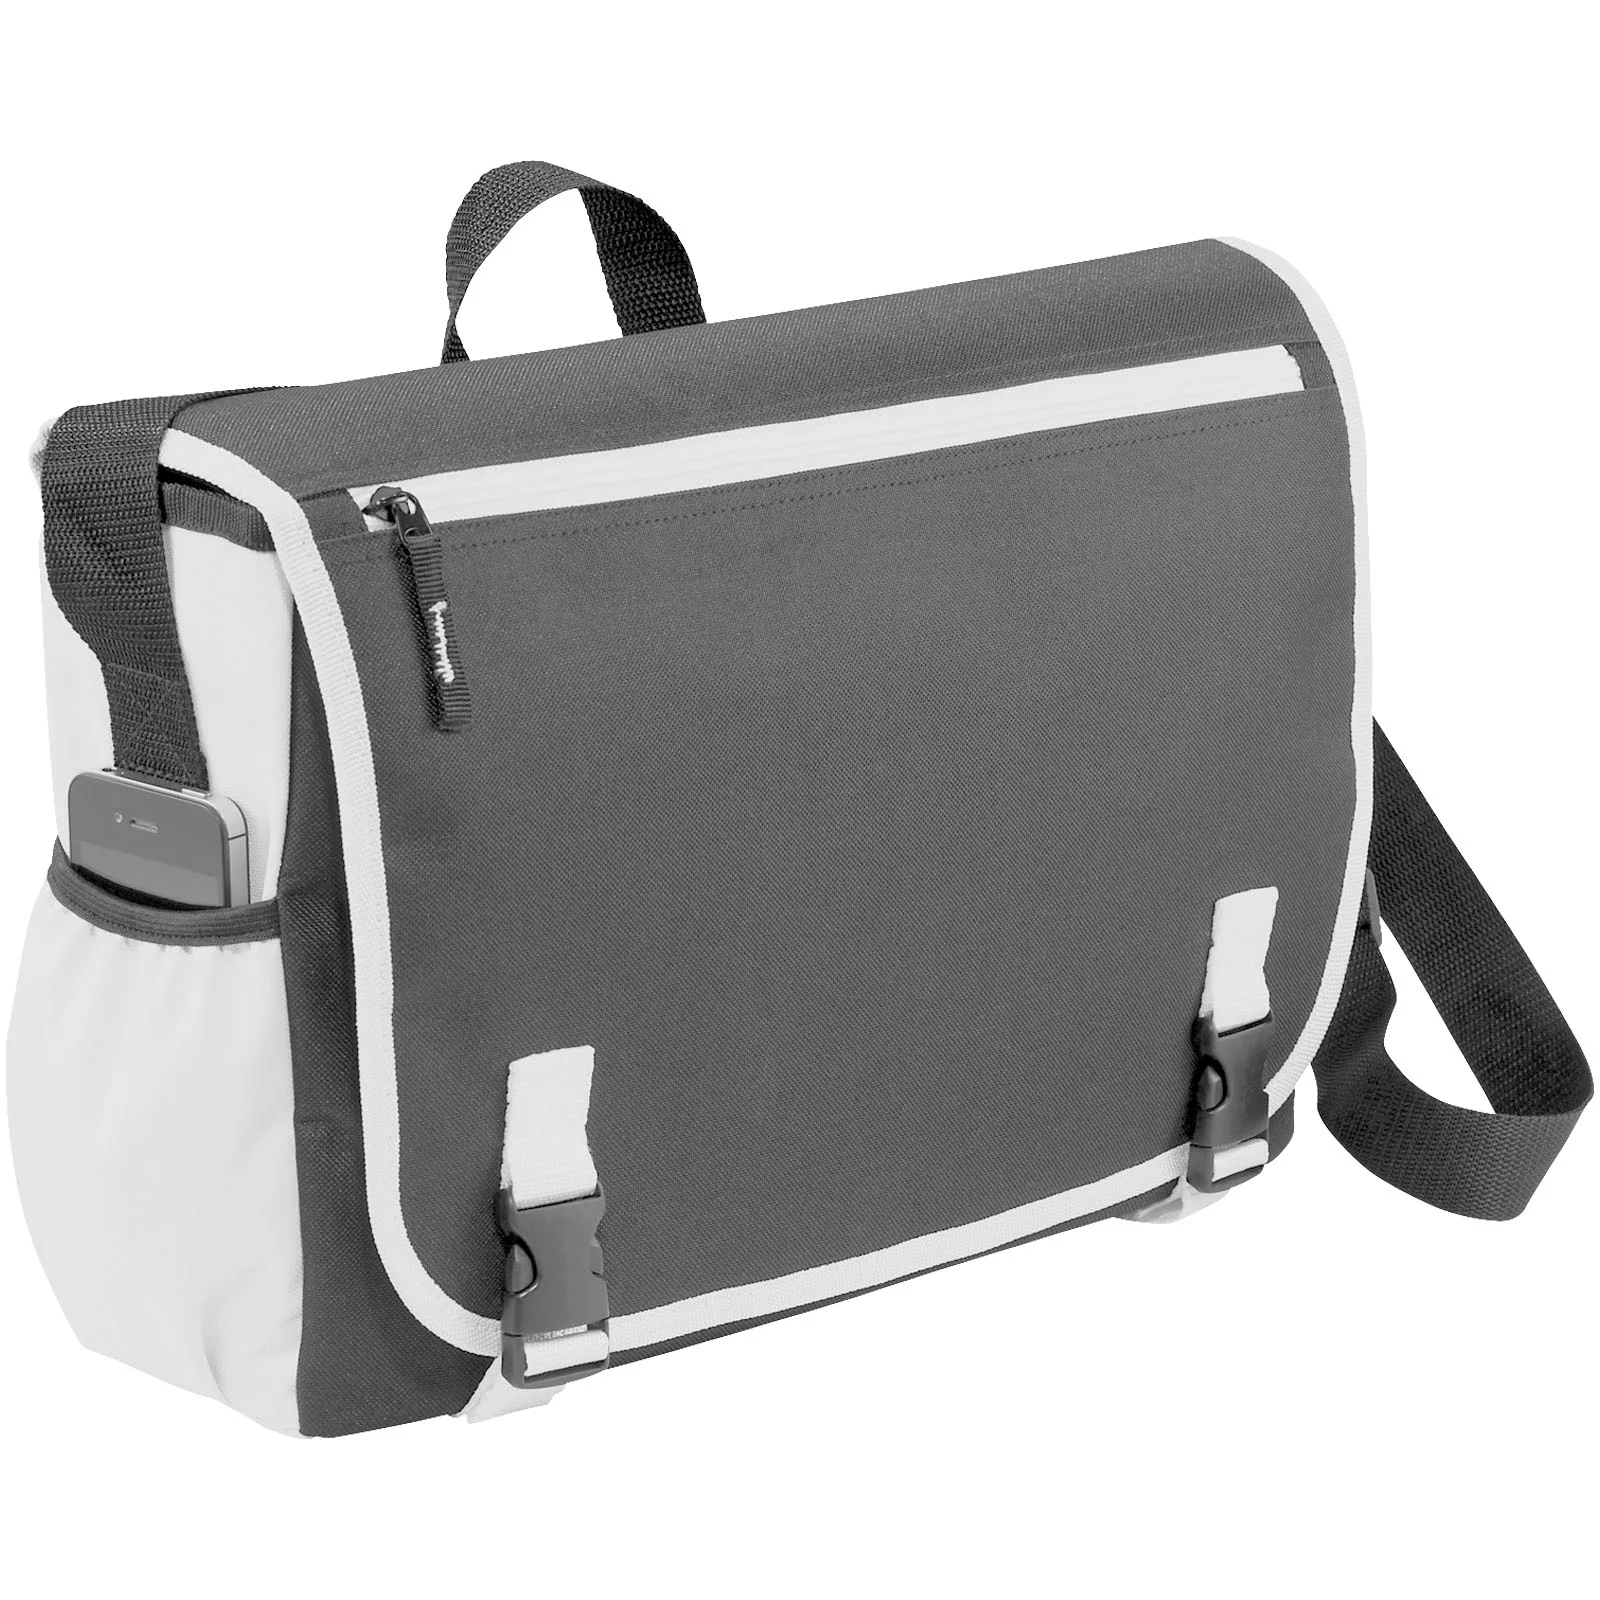 Punch 15.6 laptop messenger bags, Laptop Bags